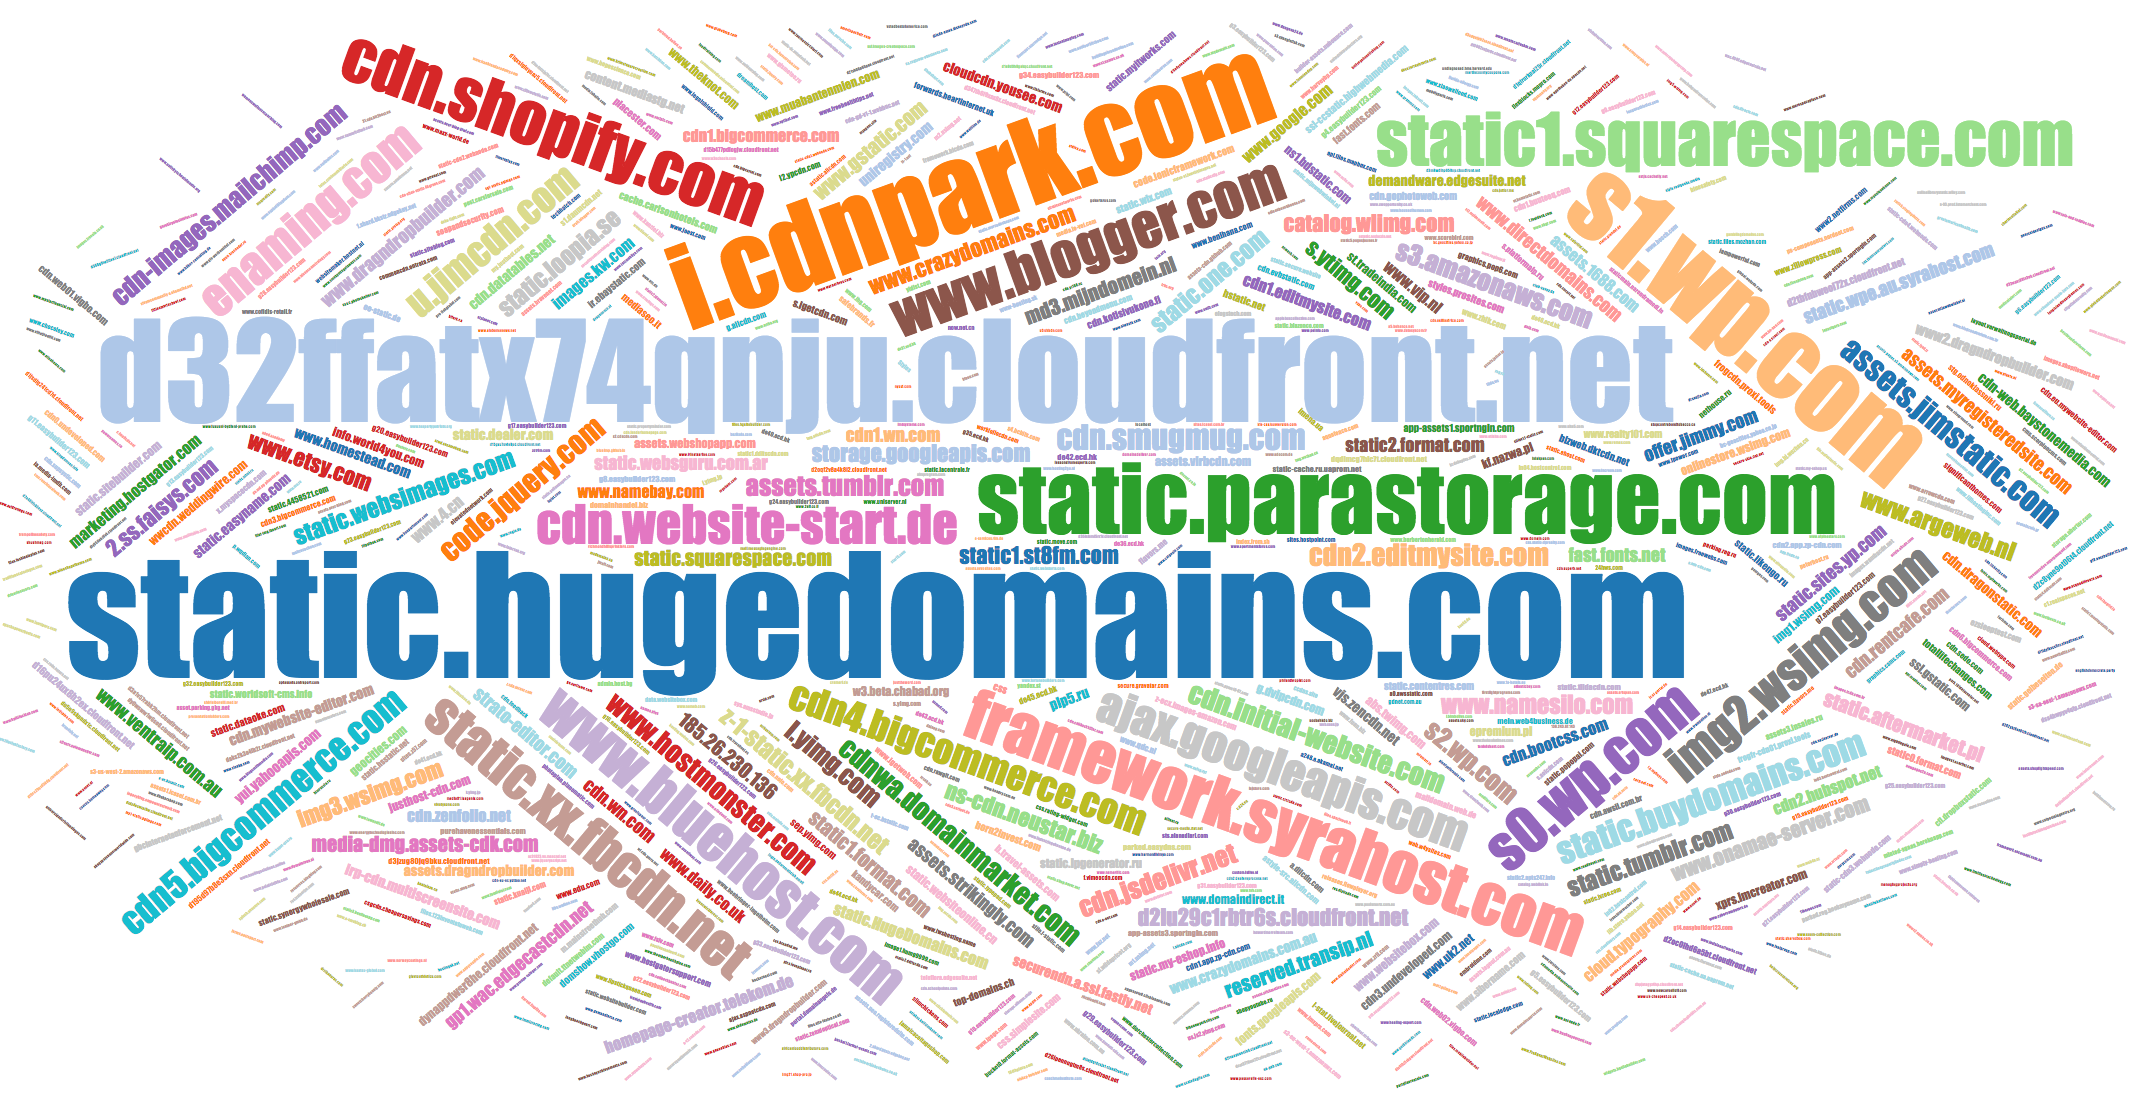 Popular names of CSS domains maxcdn.bootstrapcdn.com, marketing.hostgator.com, etc.